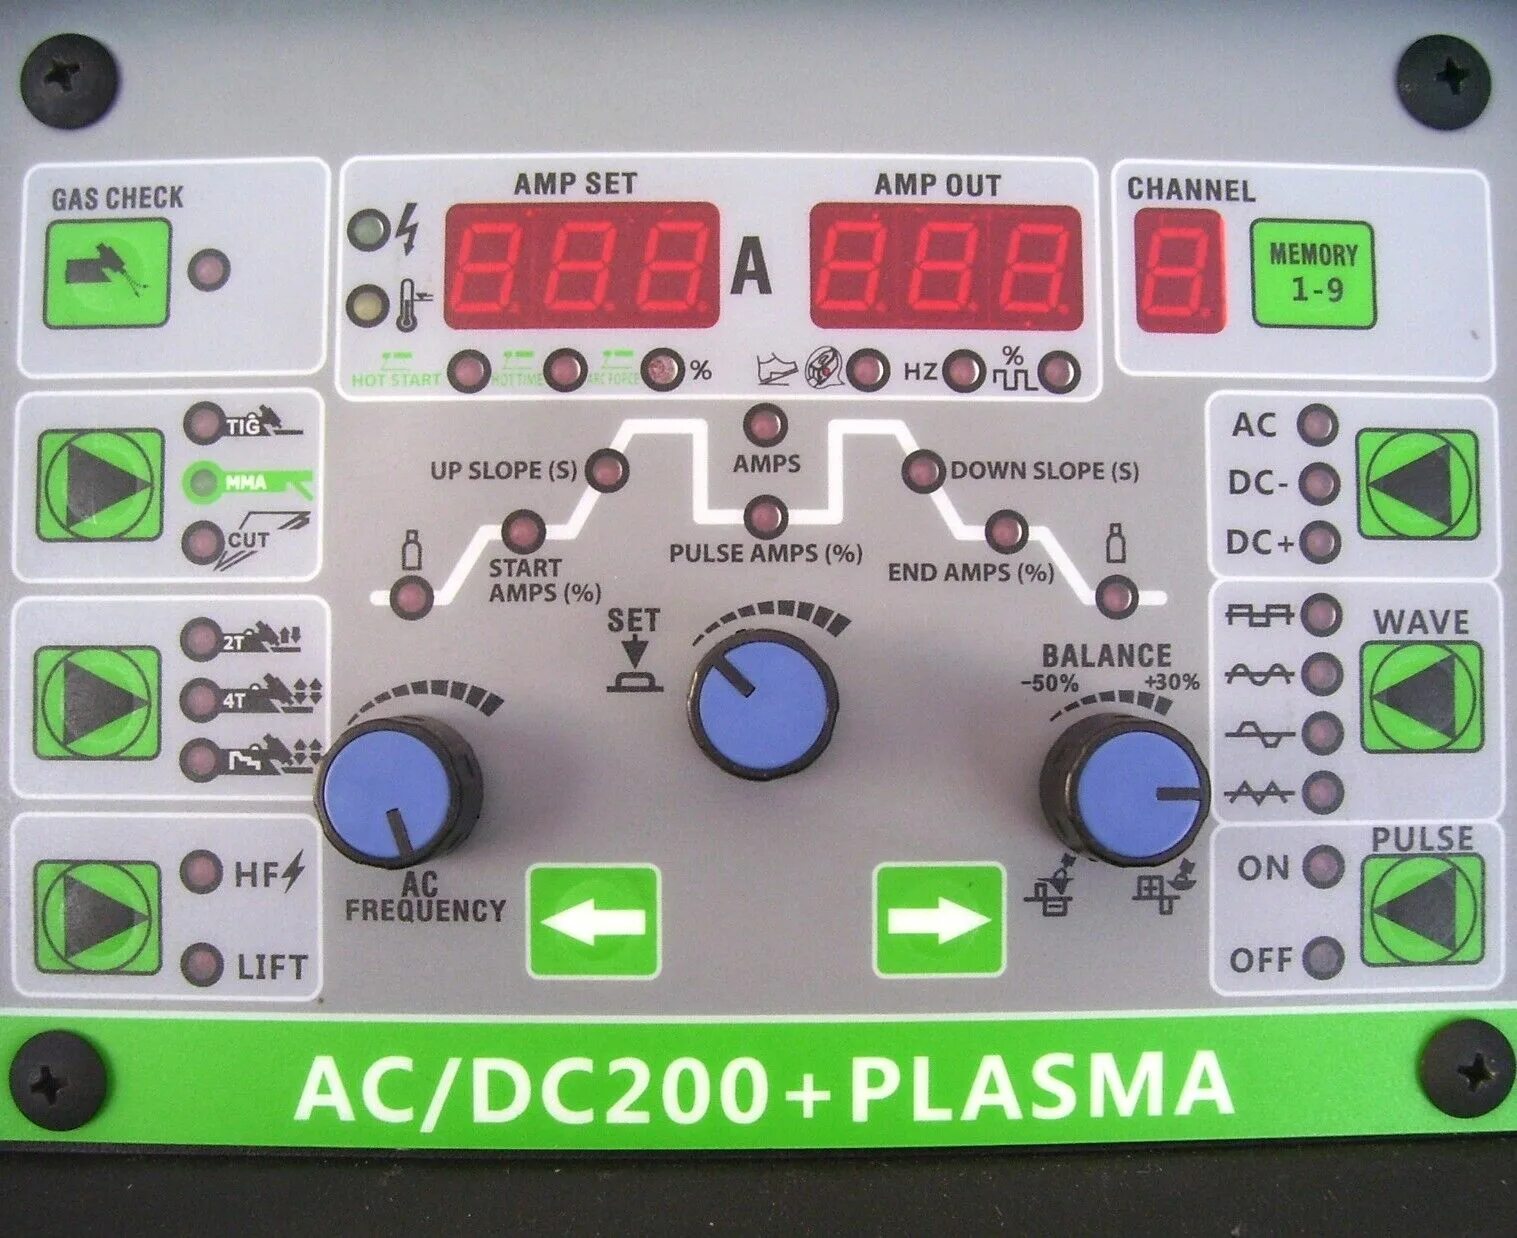 Птк d92 ac dc. Start tigline 200 AC/DC Pulse. Сварочный аппарат start tigline 200 AC/DC Pulse. Start tigline 200 AC/DC Pulse (Tig/MMA). Apex AC/DC 200.